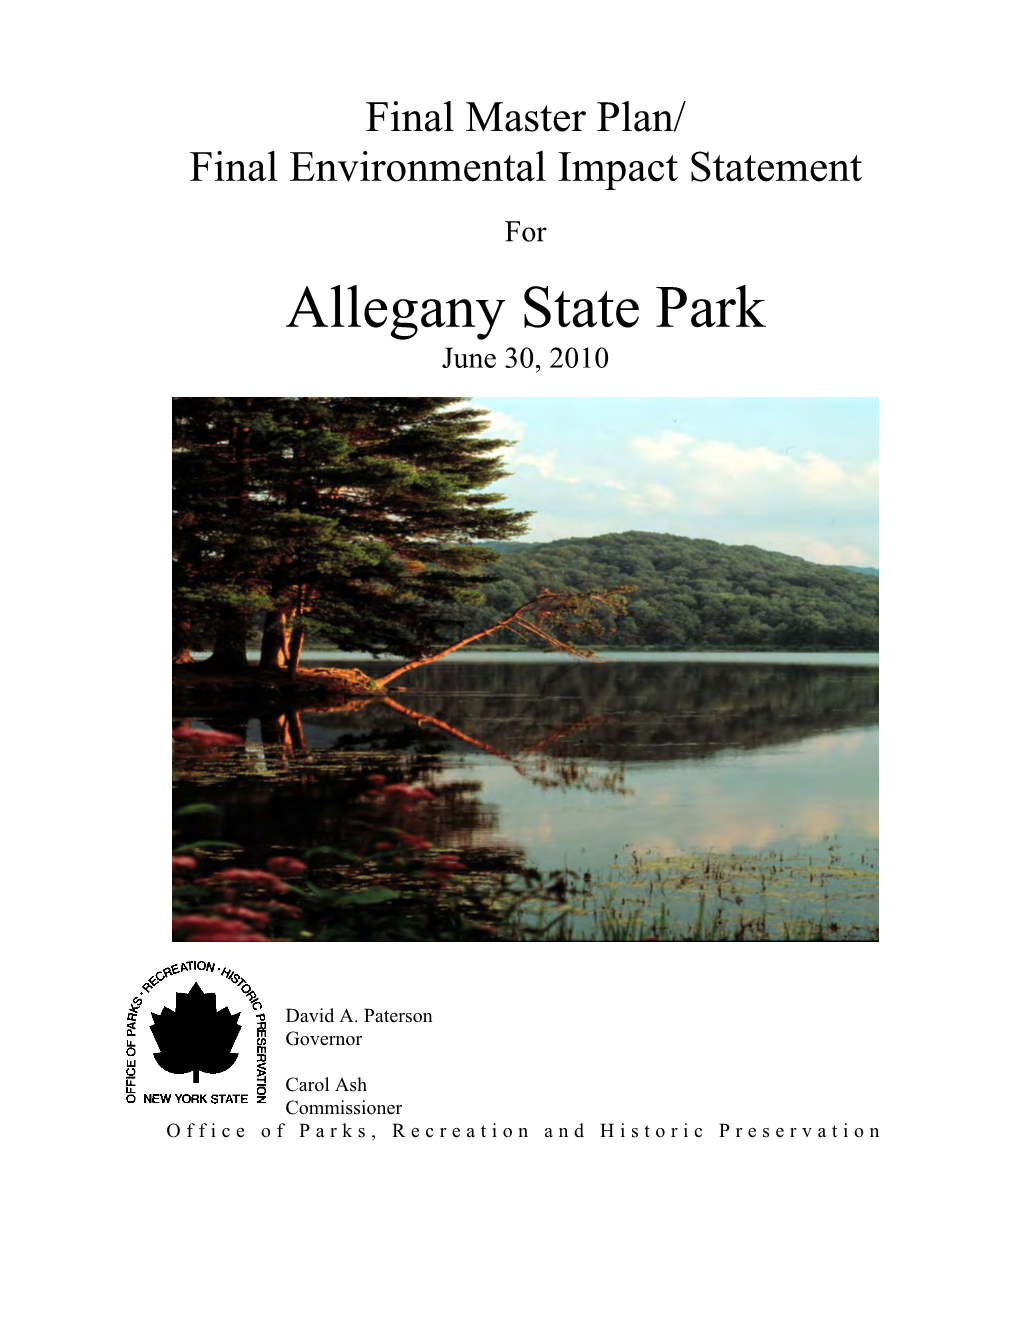 Allegany Final Master Plan/Final Environmental Impact Statement